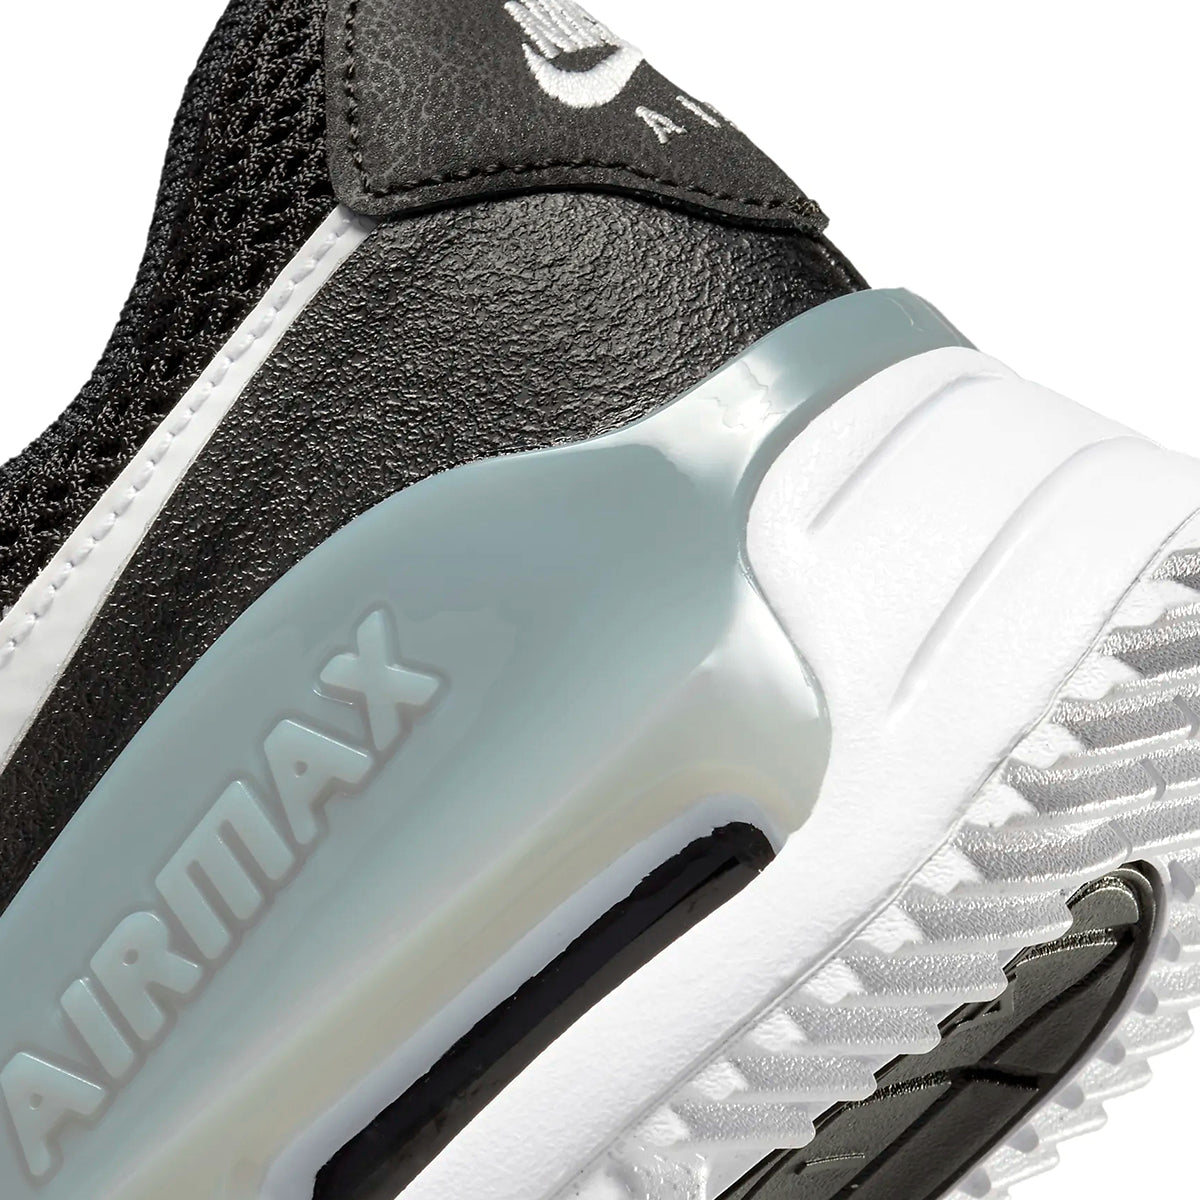 Zapatillas Nike Mujer DM9538-001 Air Max Systm